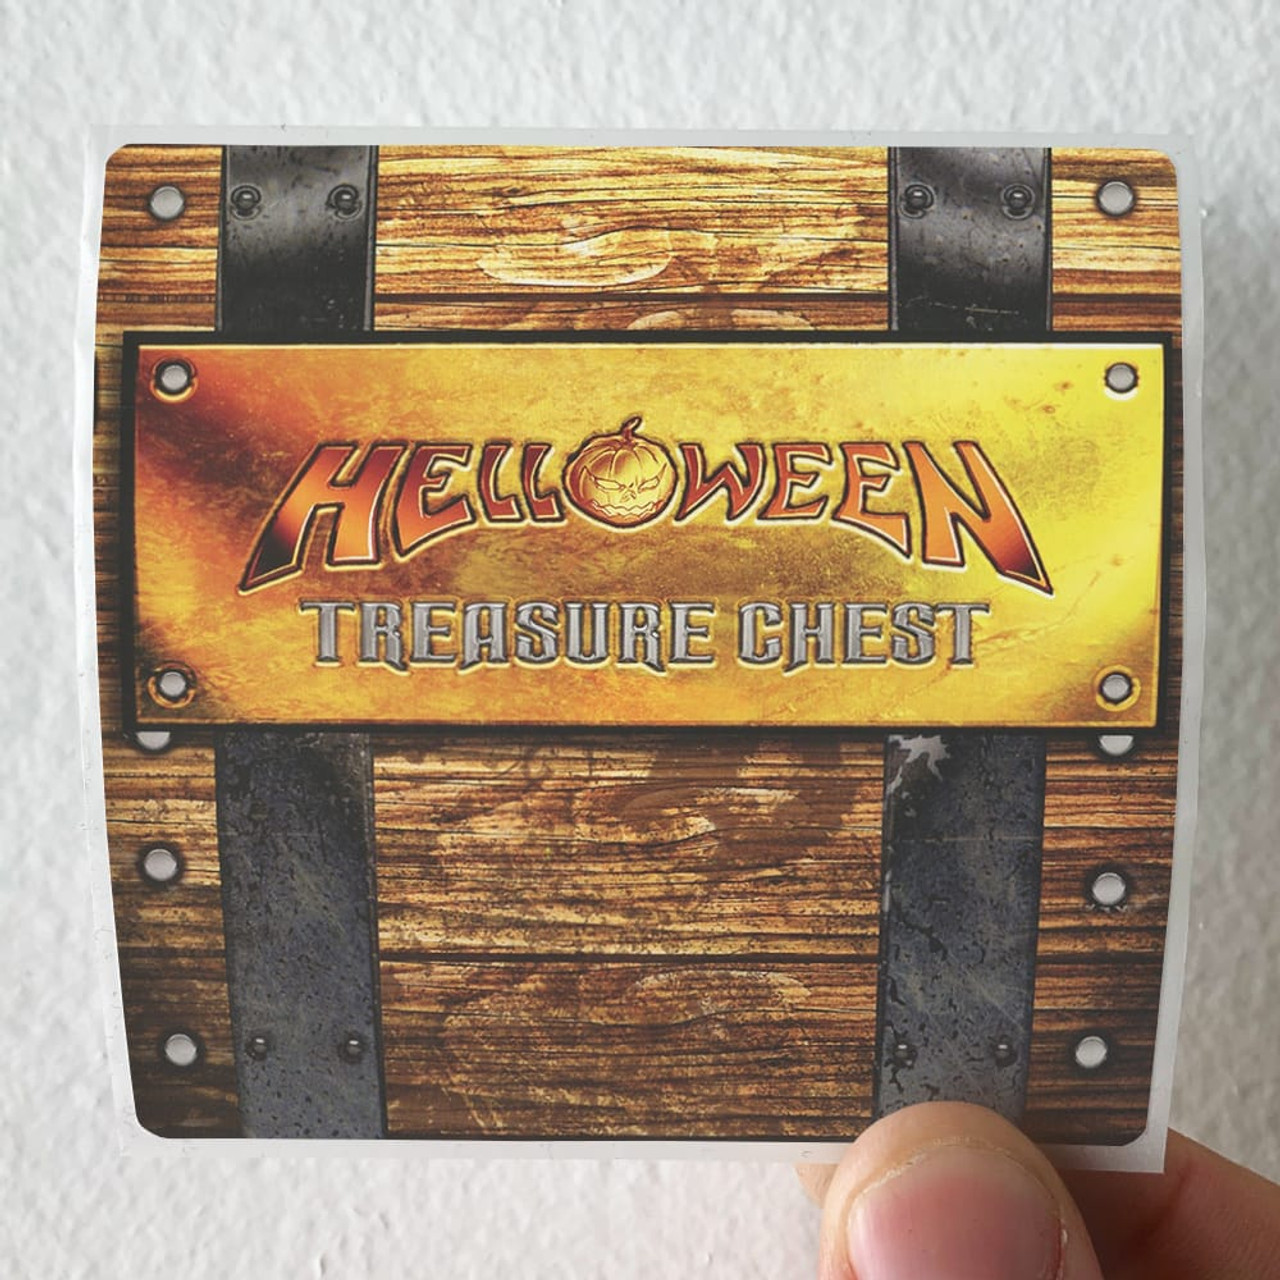 Helloween Treasure Chest Album Cover Sticker